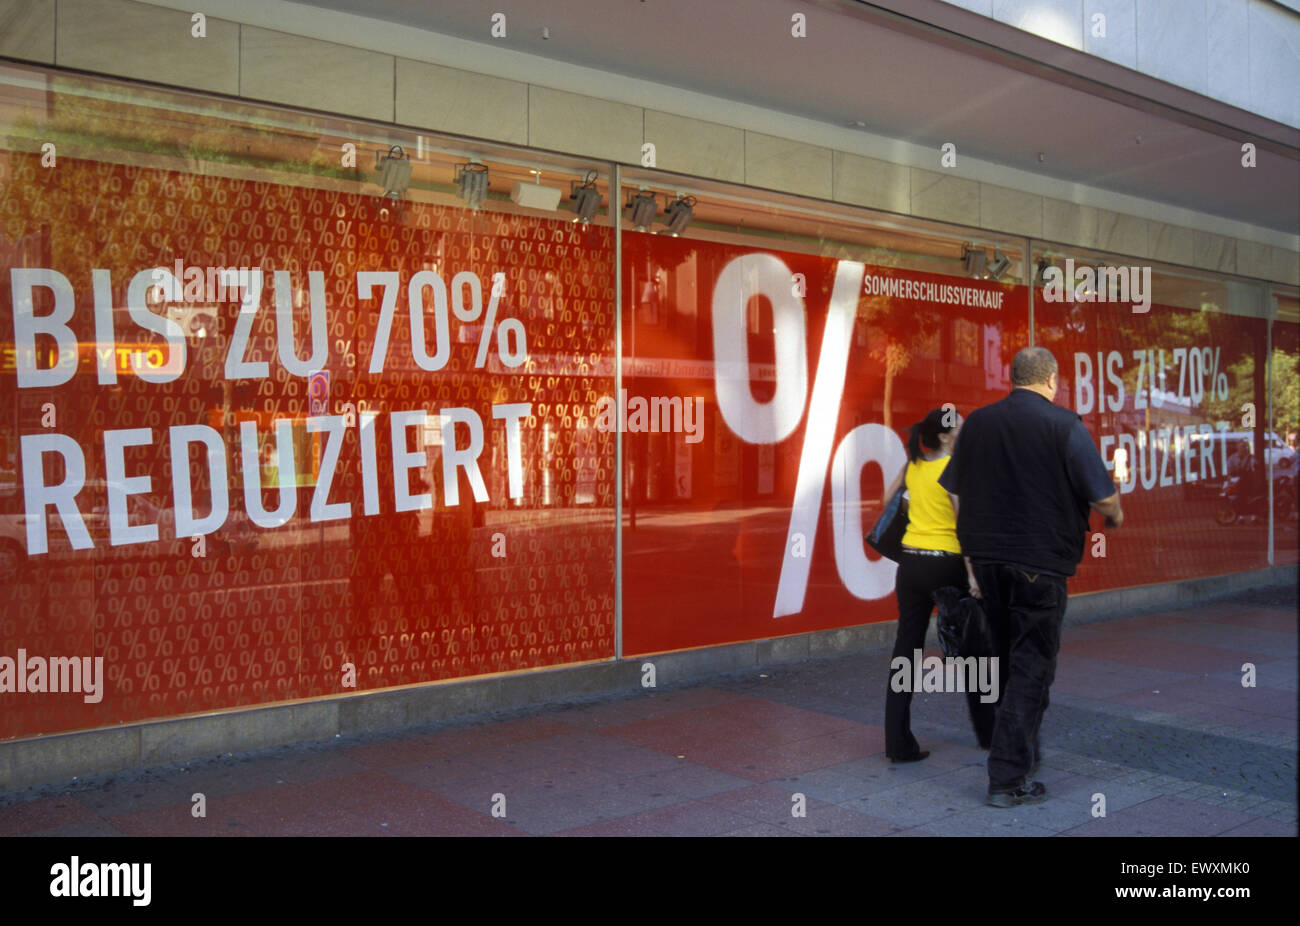 DEU, Germany, Aachen, bill in a shop window campaigns sales discounts.  DEU, Deutschland, Aachen, Plakat in Schaufenster wirbt m Stock Photo